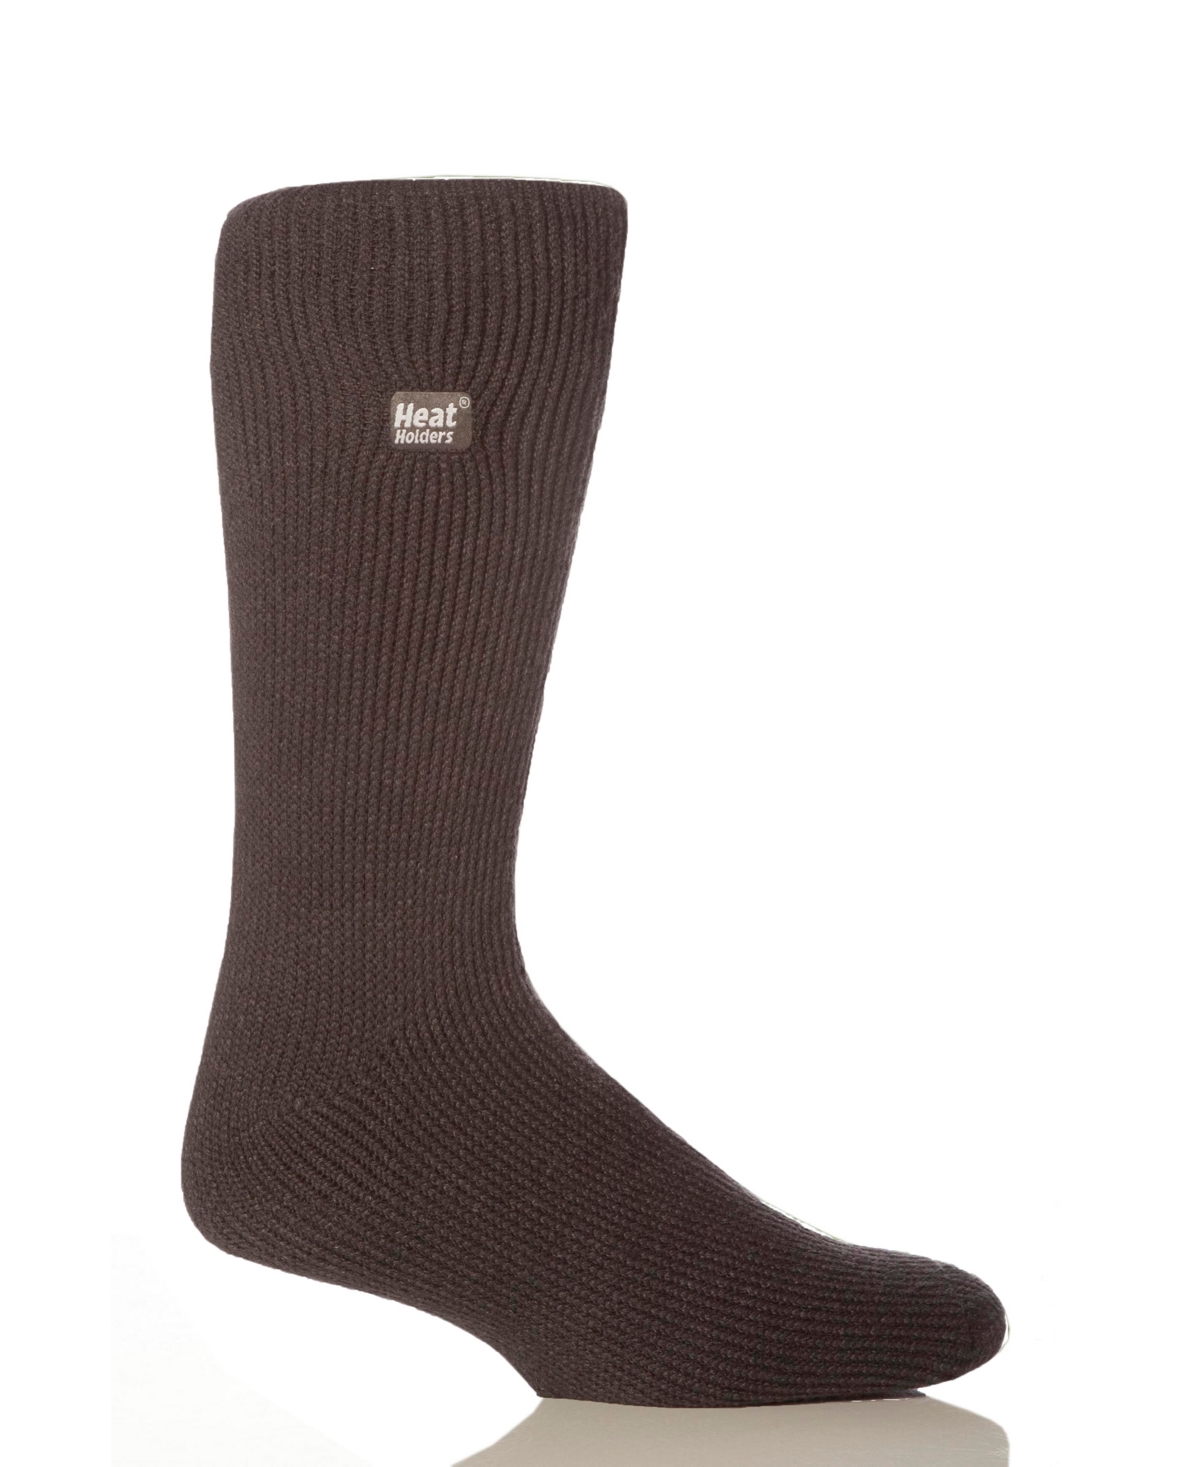 Heat Holders Men's Original Solid Thermal Socks